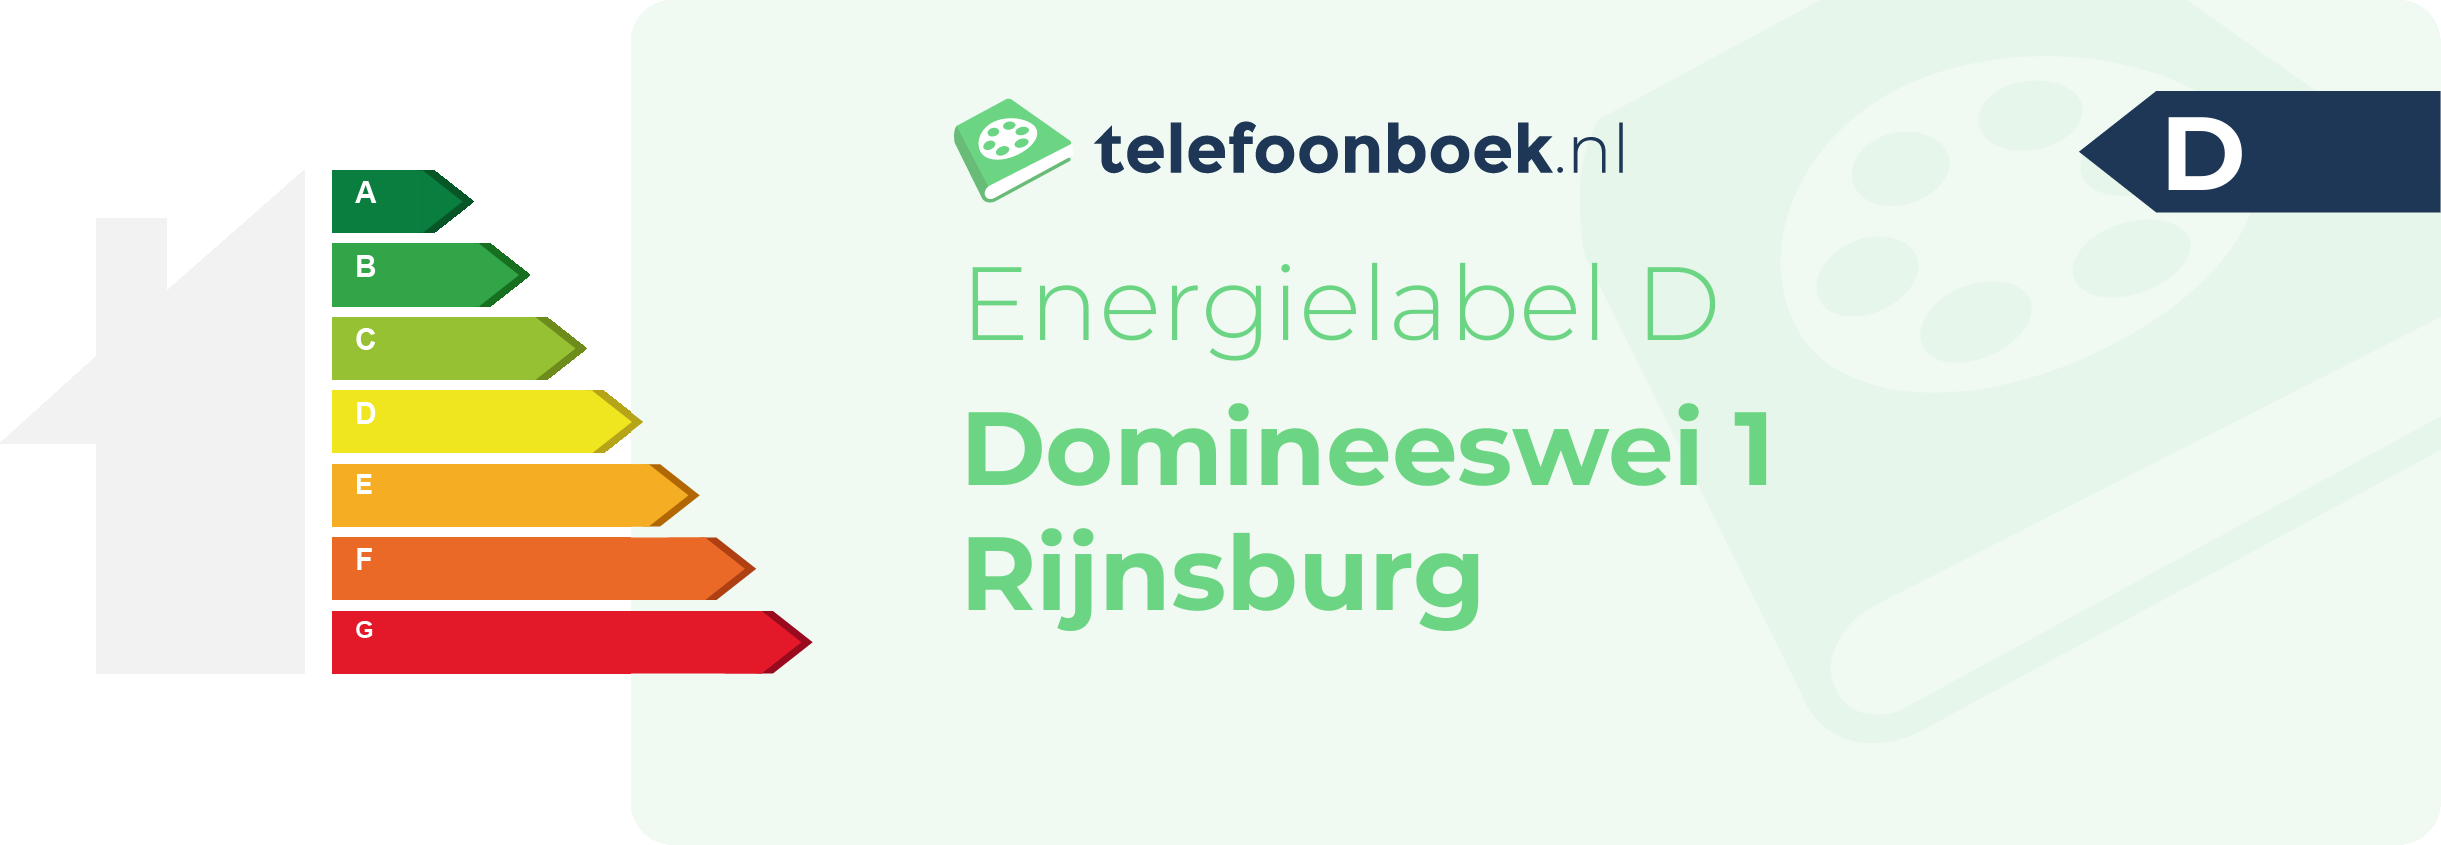 Energielabel Domineeswei 1 Rijnsburg